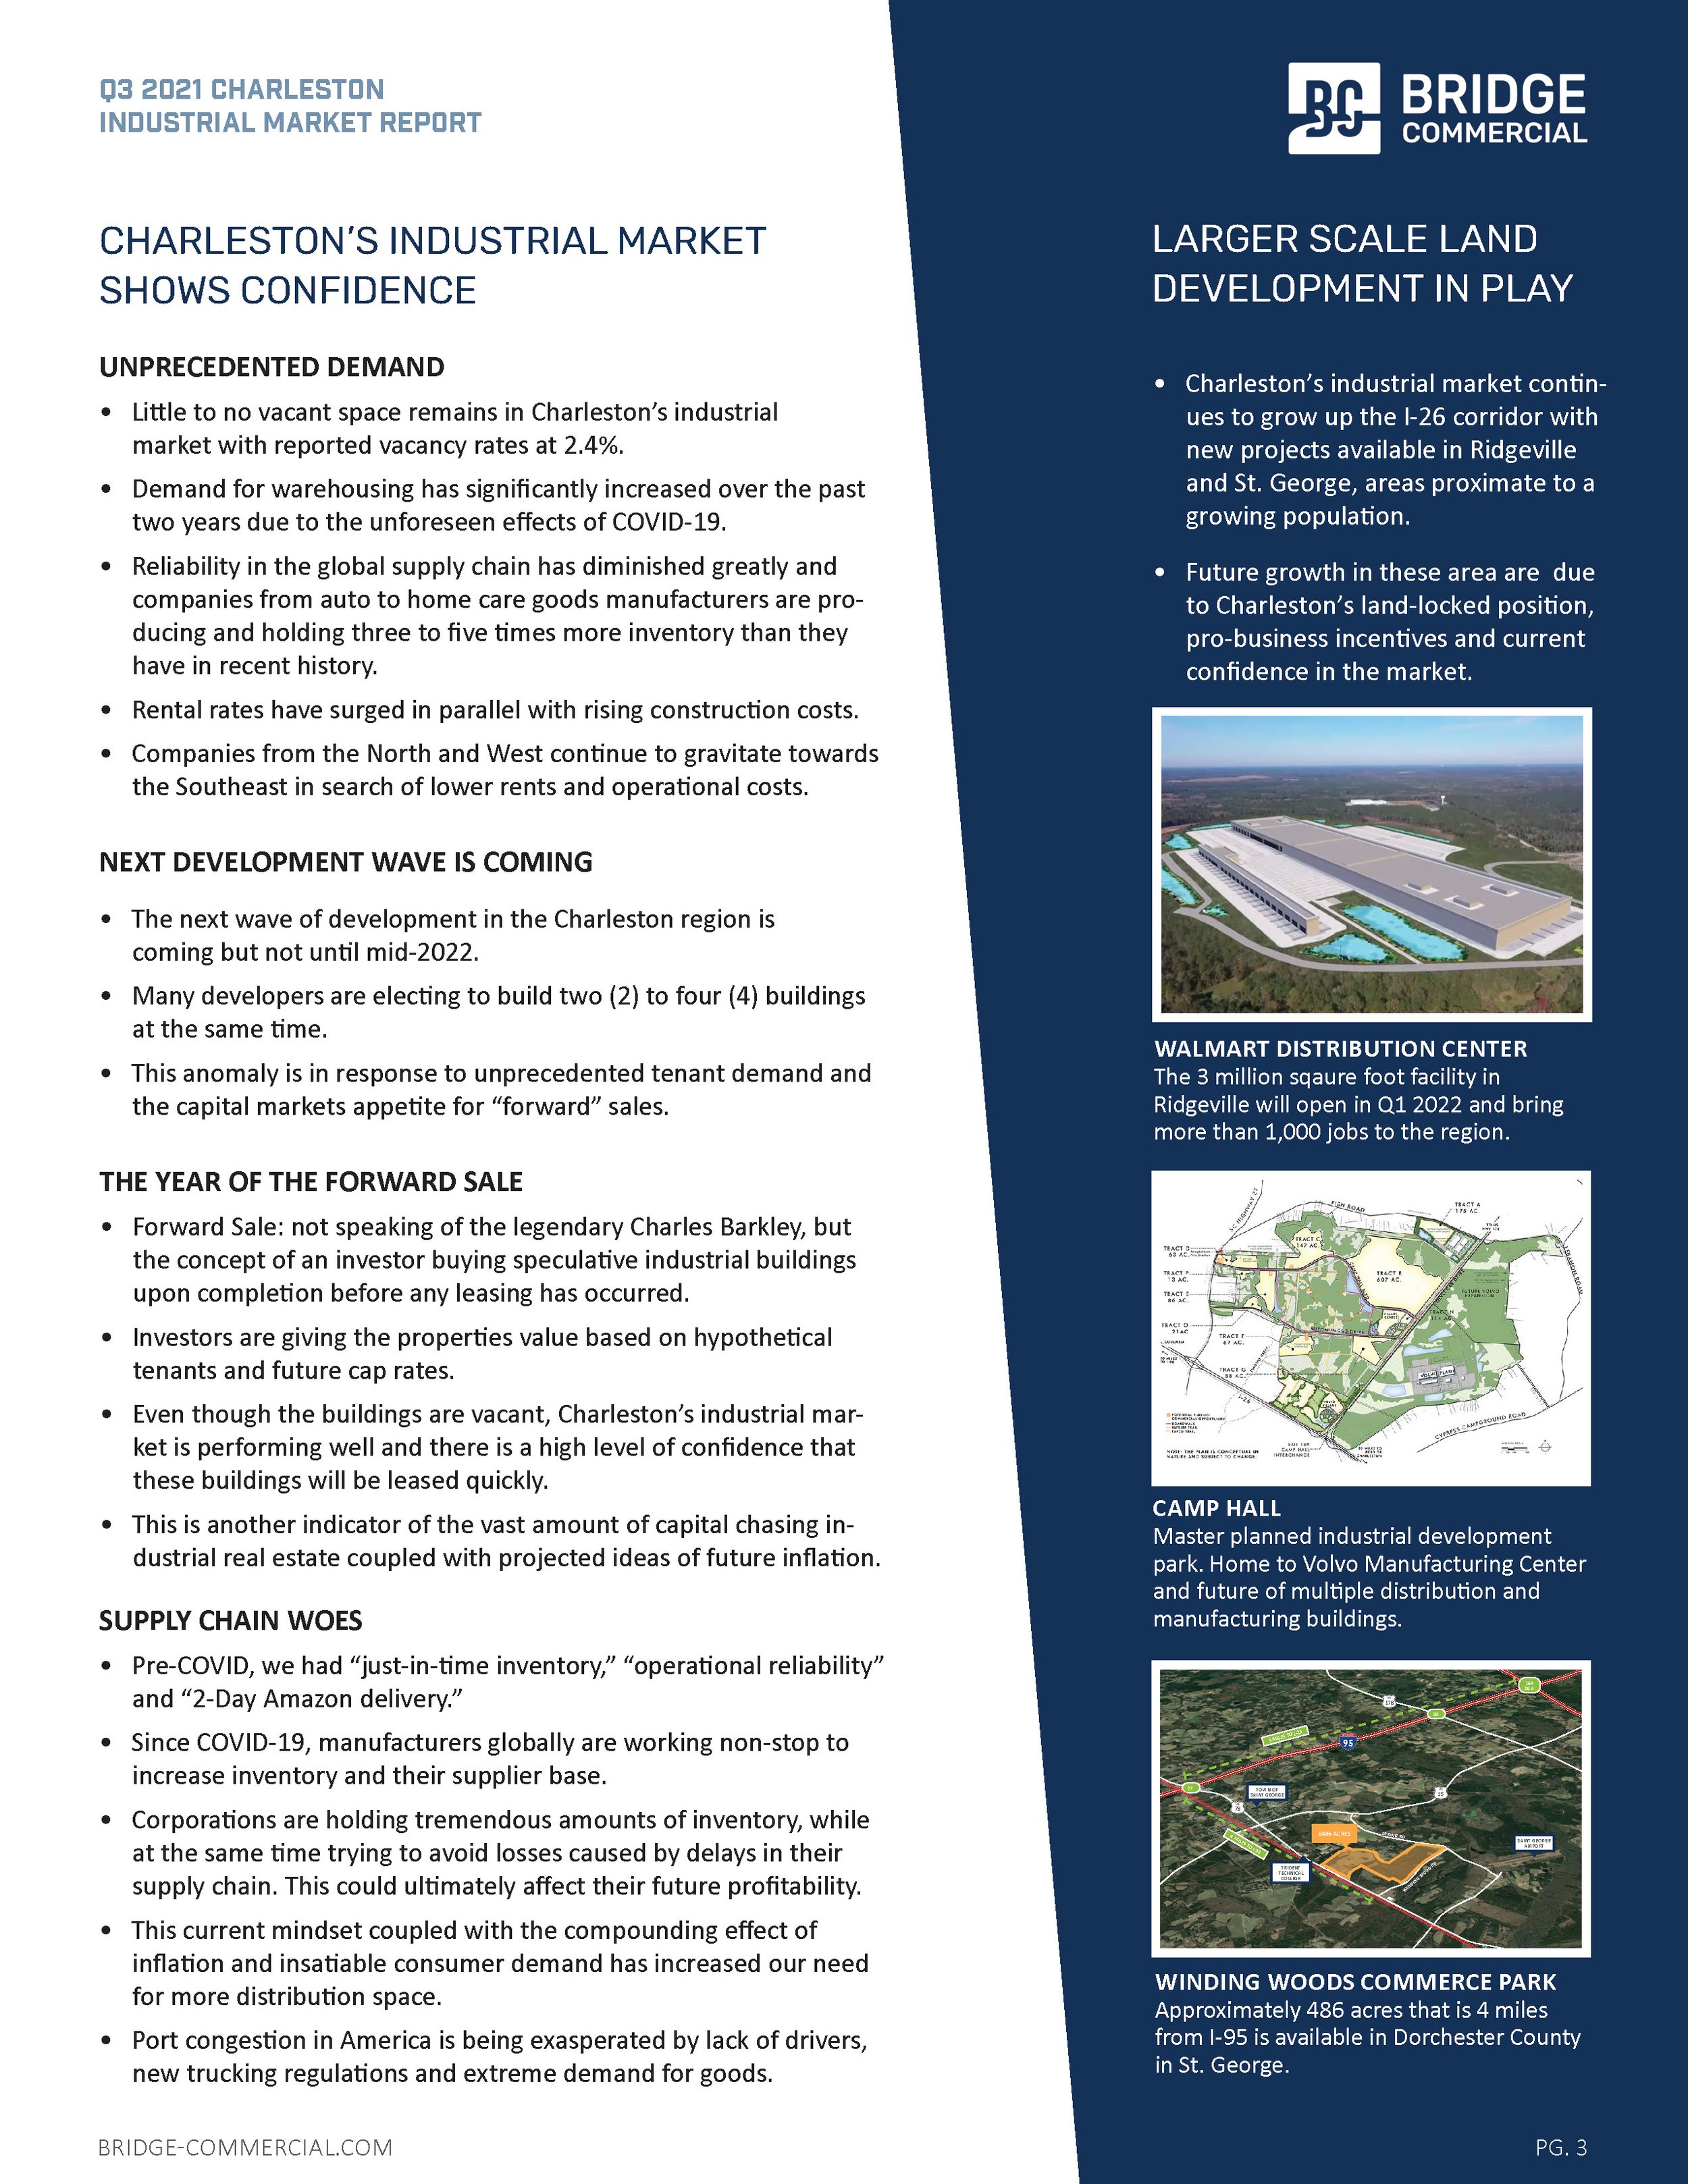 Q3 2021 Charleston Industrial Market Report_Bridge Commercial_Page_3.jpg